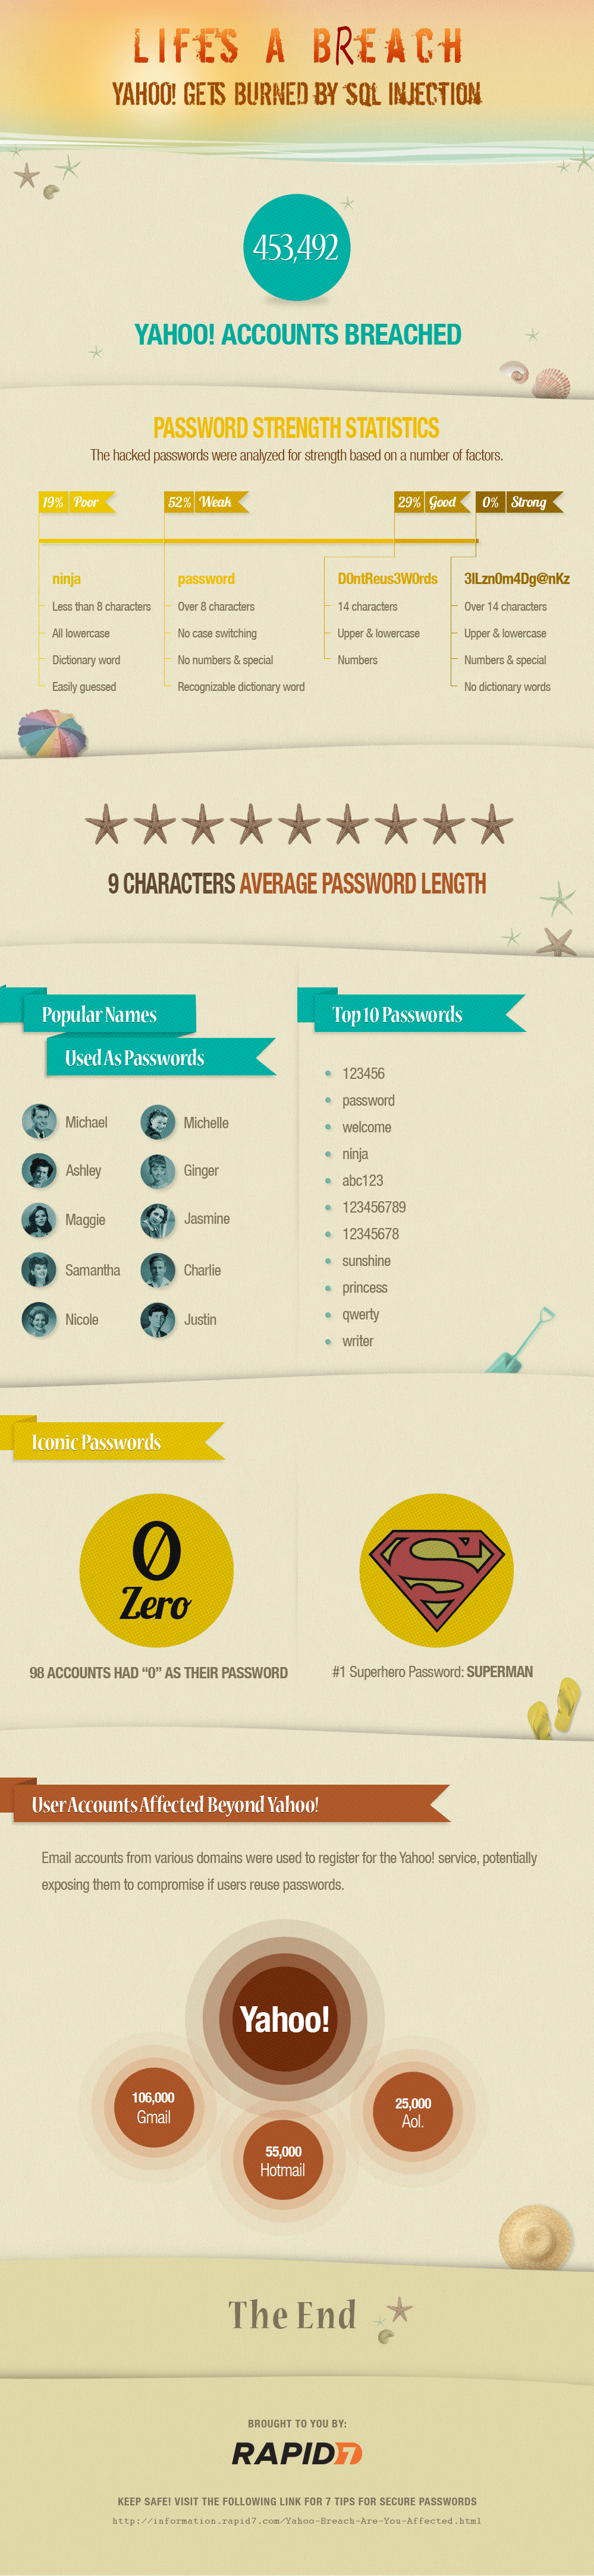 yahoo-password-breach-infographic.gif